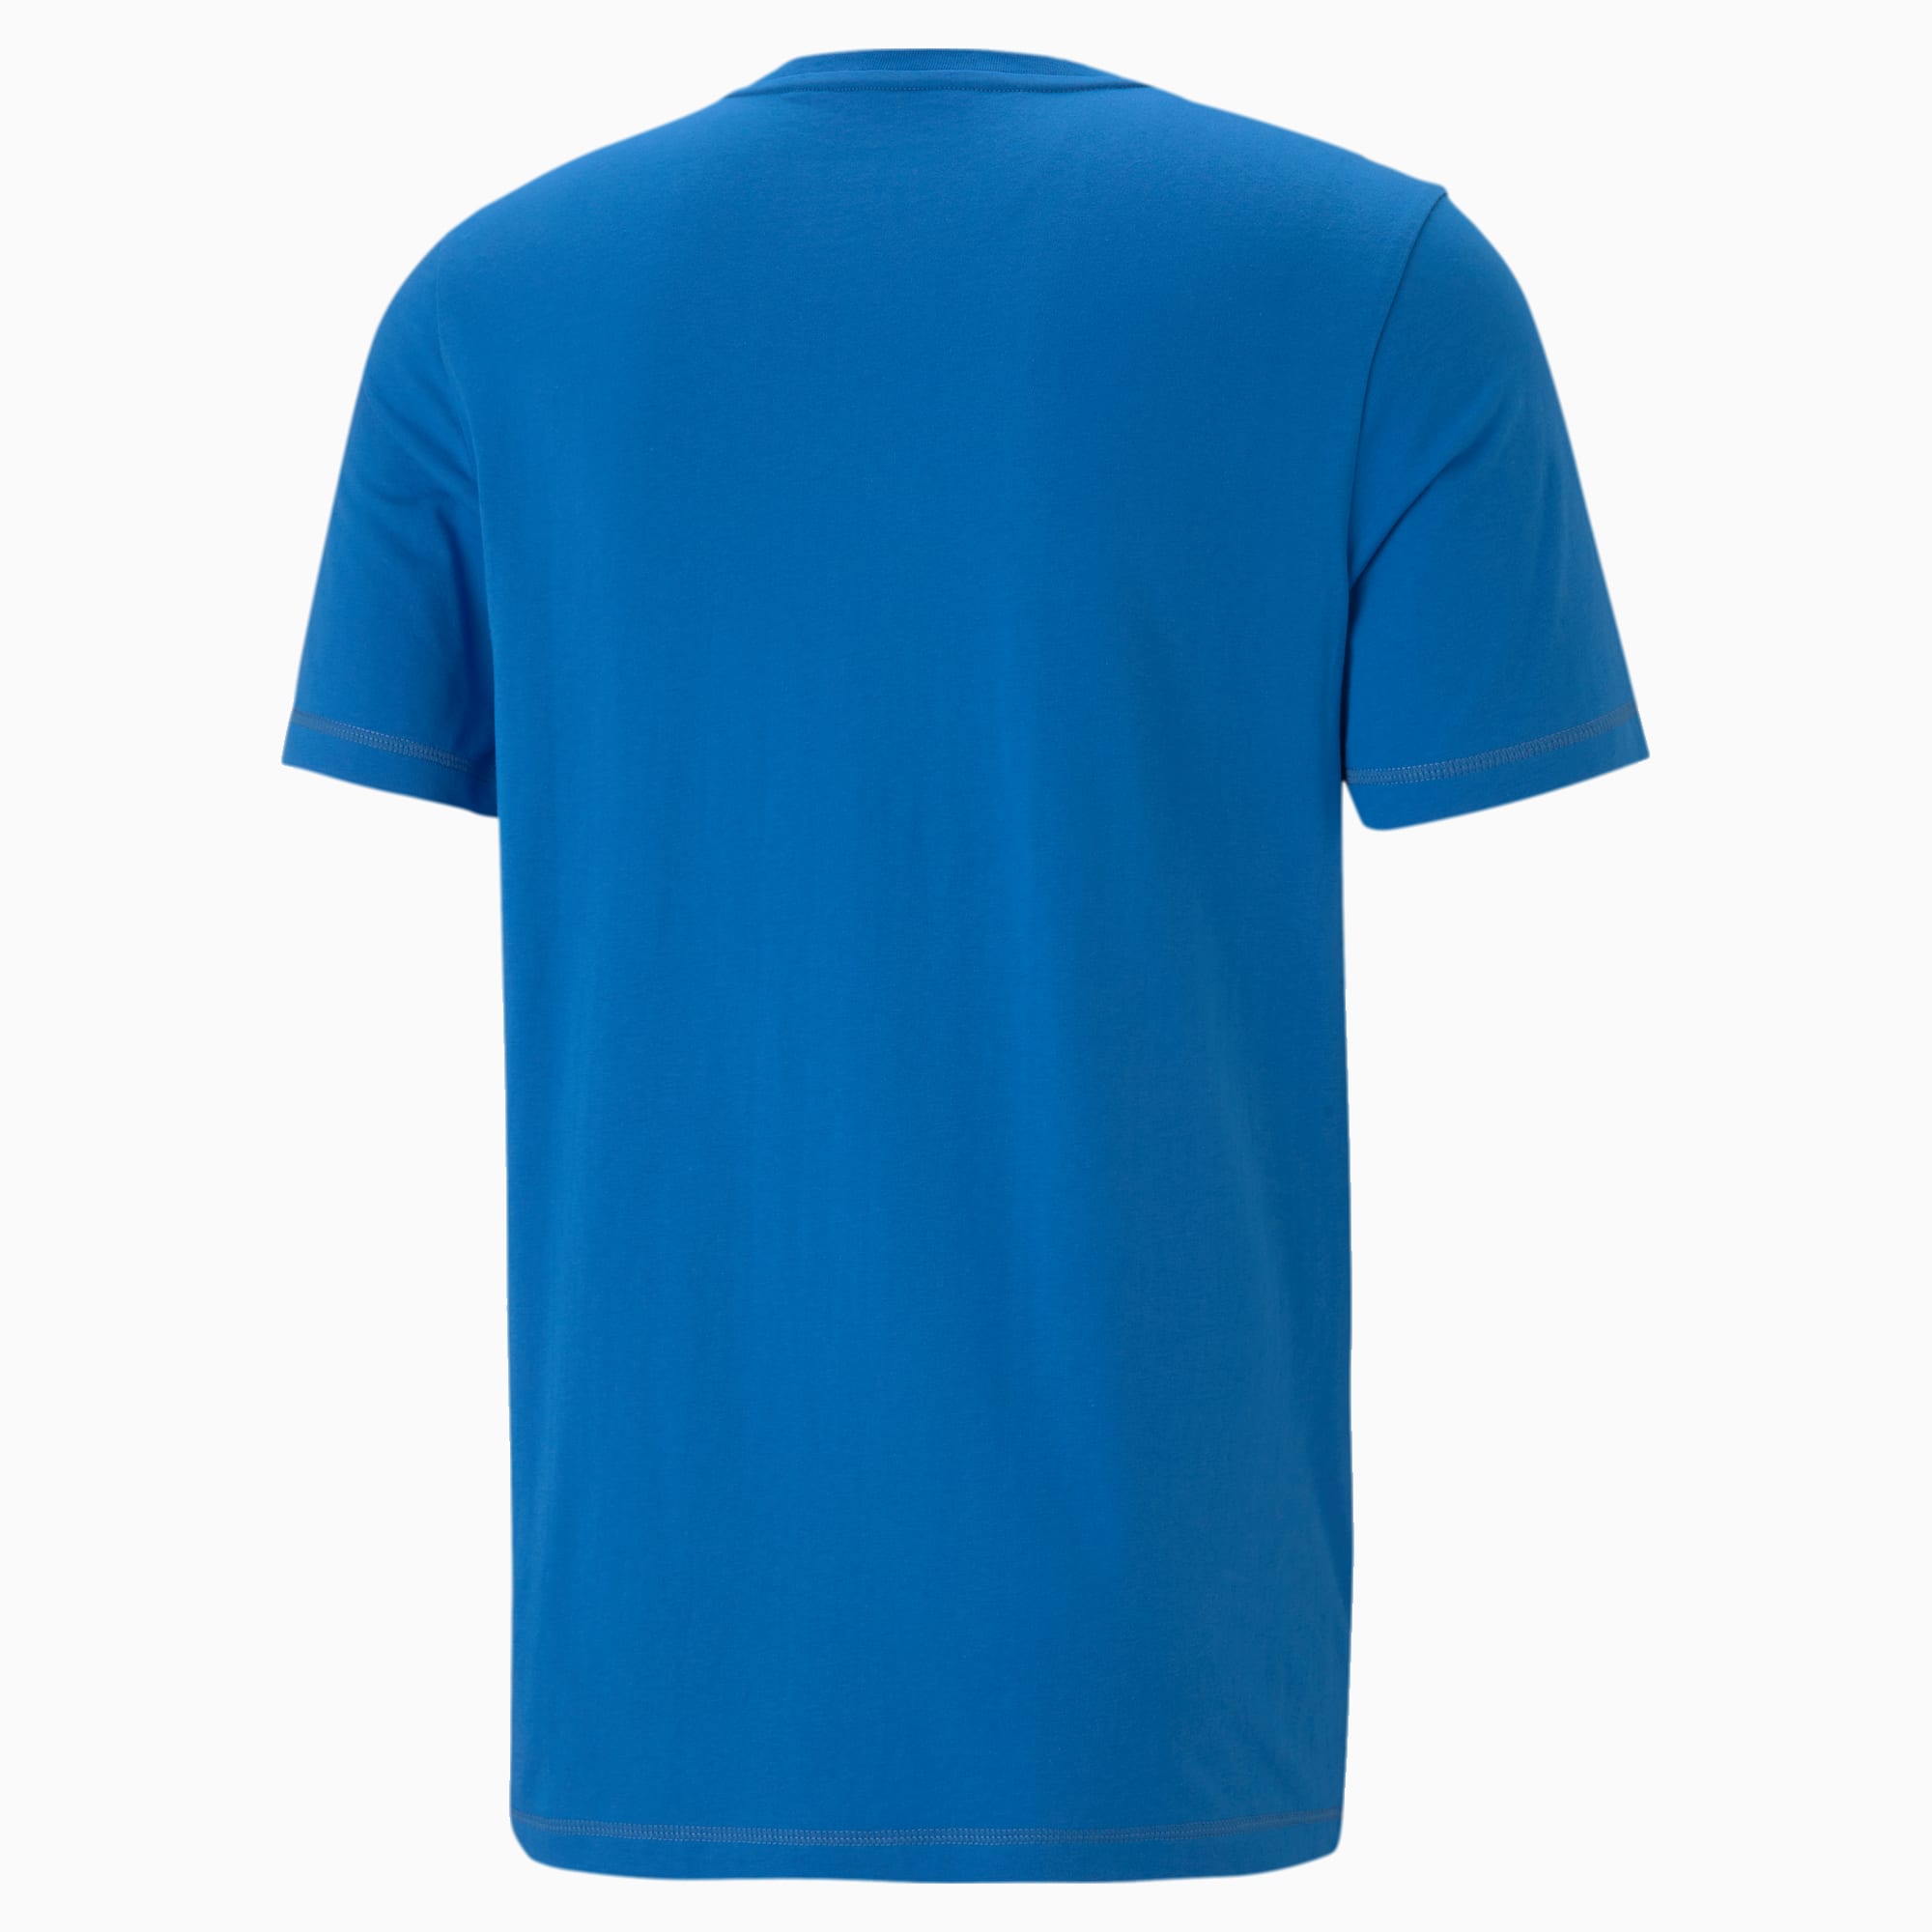 PUMA Active Soft Men's T-Shirt, Royal Blue, Size XS, Clothing